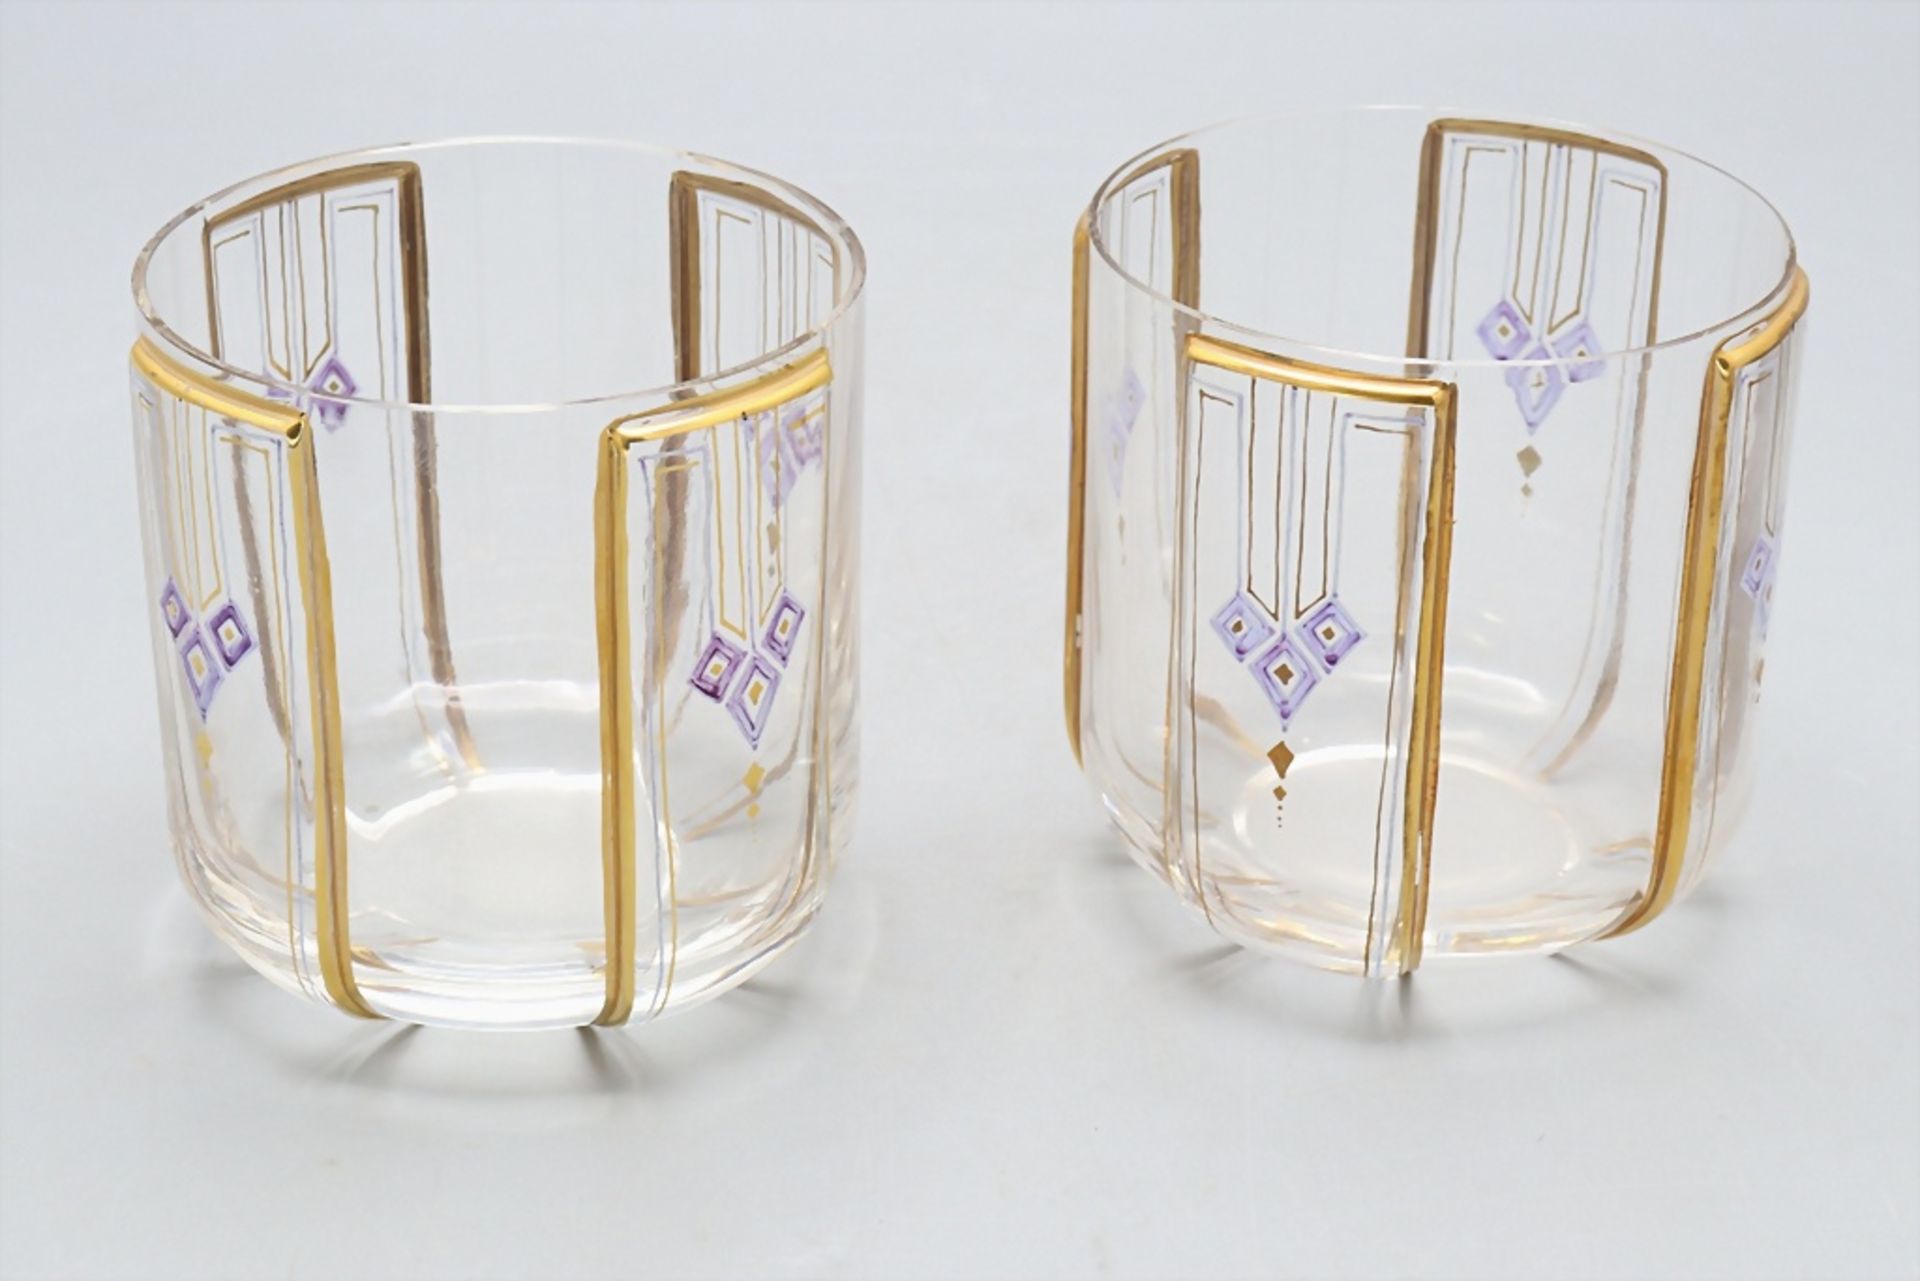 Zwei Art Déco Vasen / Two Art Deco glass vases, 20. Jh. - Bild 2 aus 6